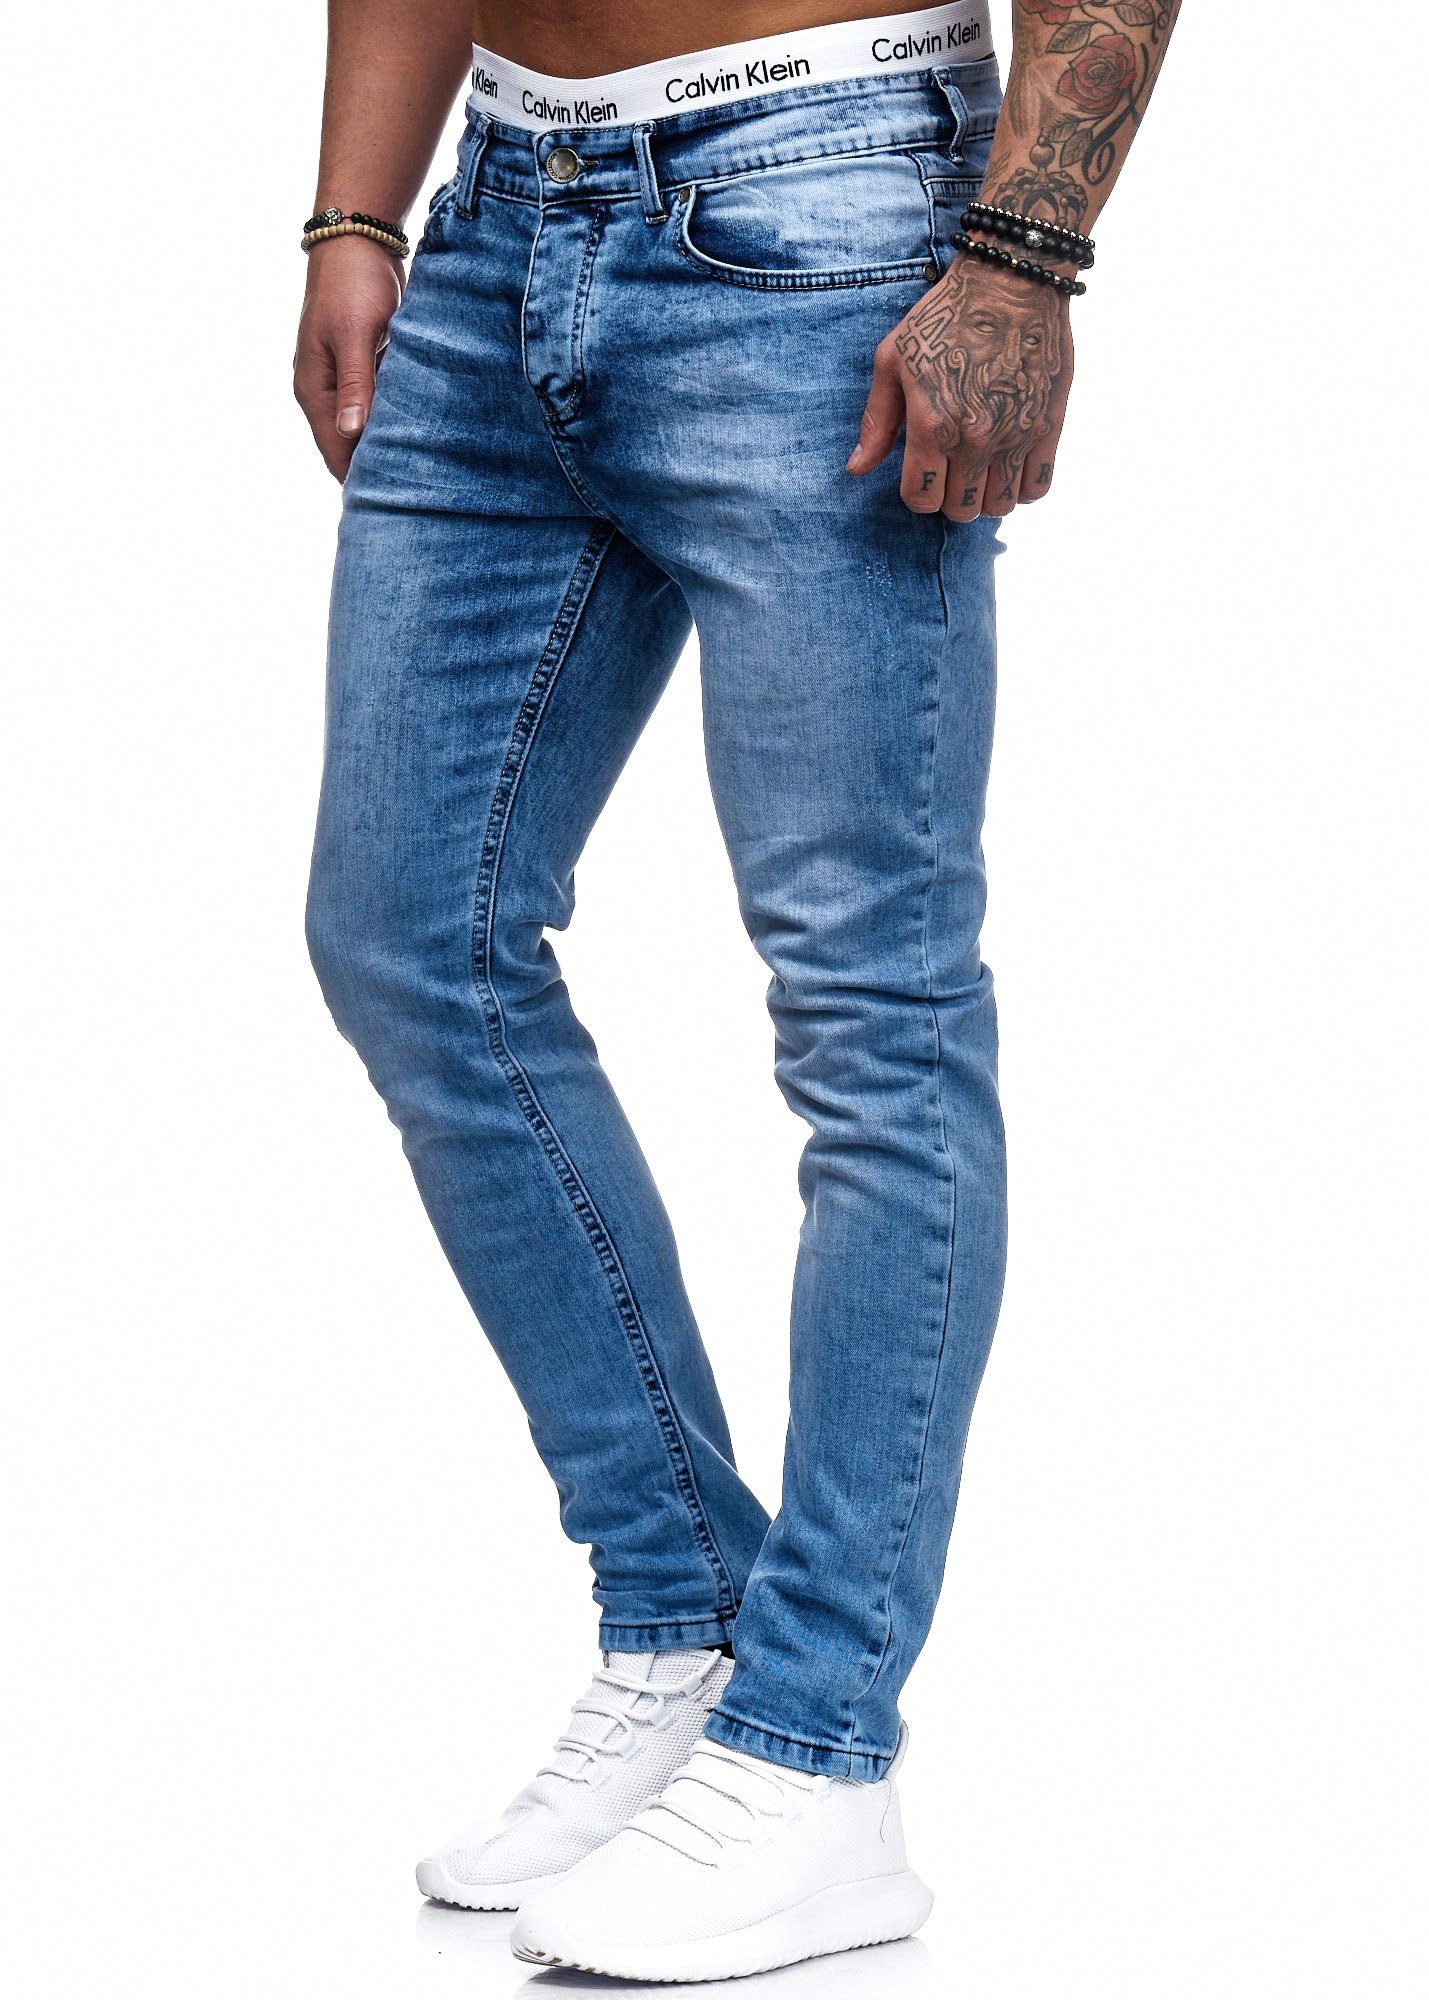 Code47 Slim-fit-Jeans Herren Designer Chino Jeans Hose Basic Stretch Jeanshose Slim Fit Hellblau 5080 | Slim-Fit Jeans